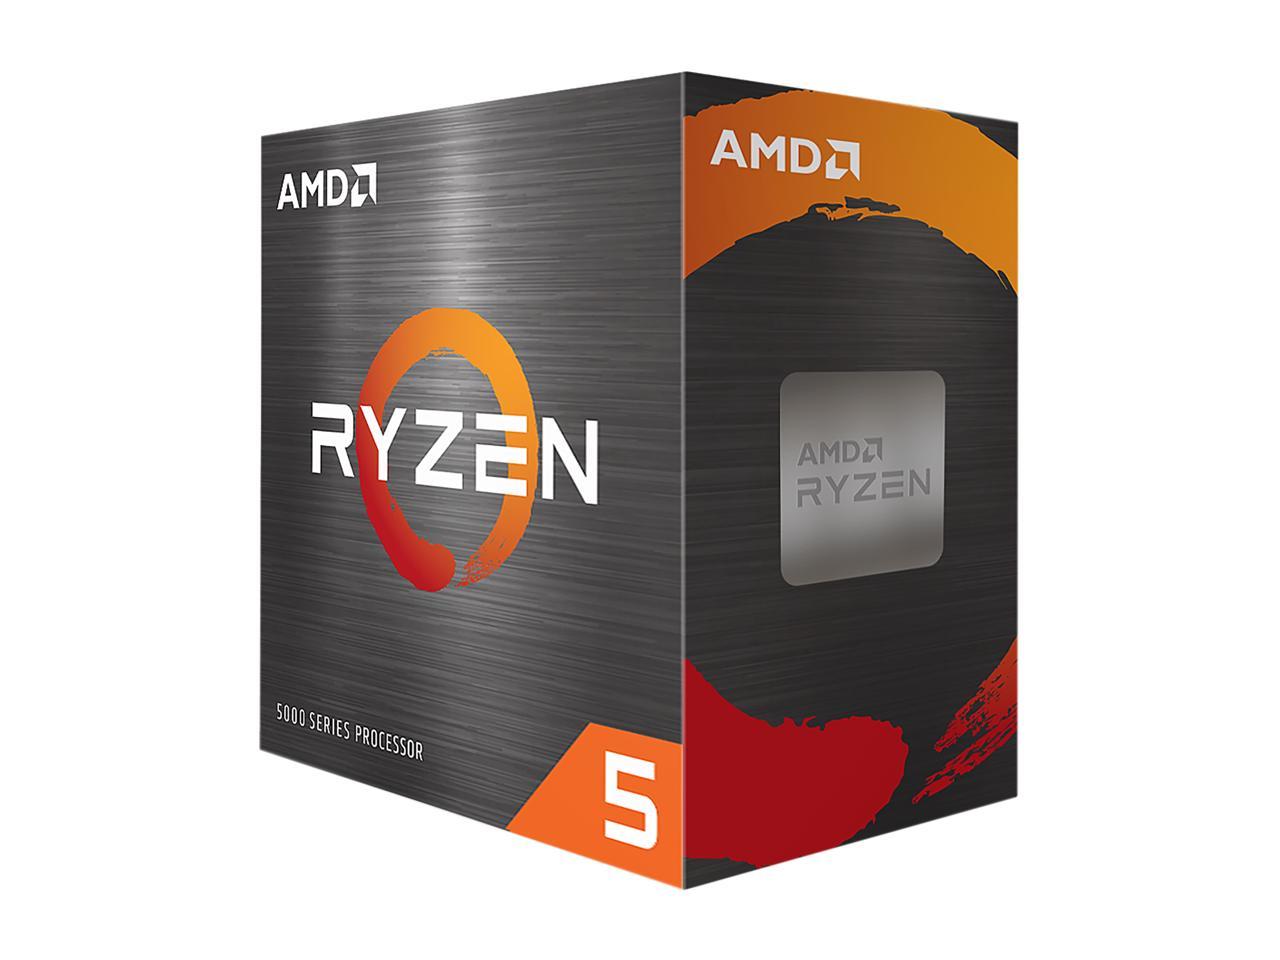 AMD Ryzen 5 5500 6 Core CPU AM4 65W $82 after Promo Code @ Newegg